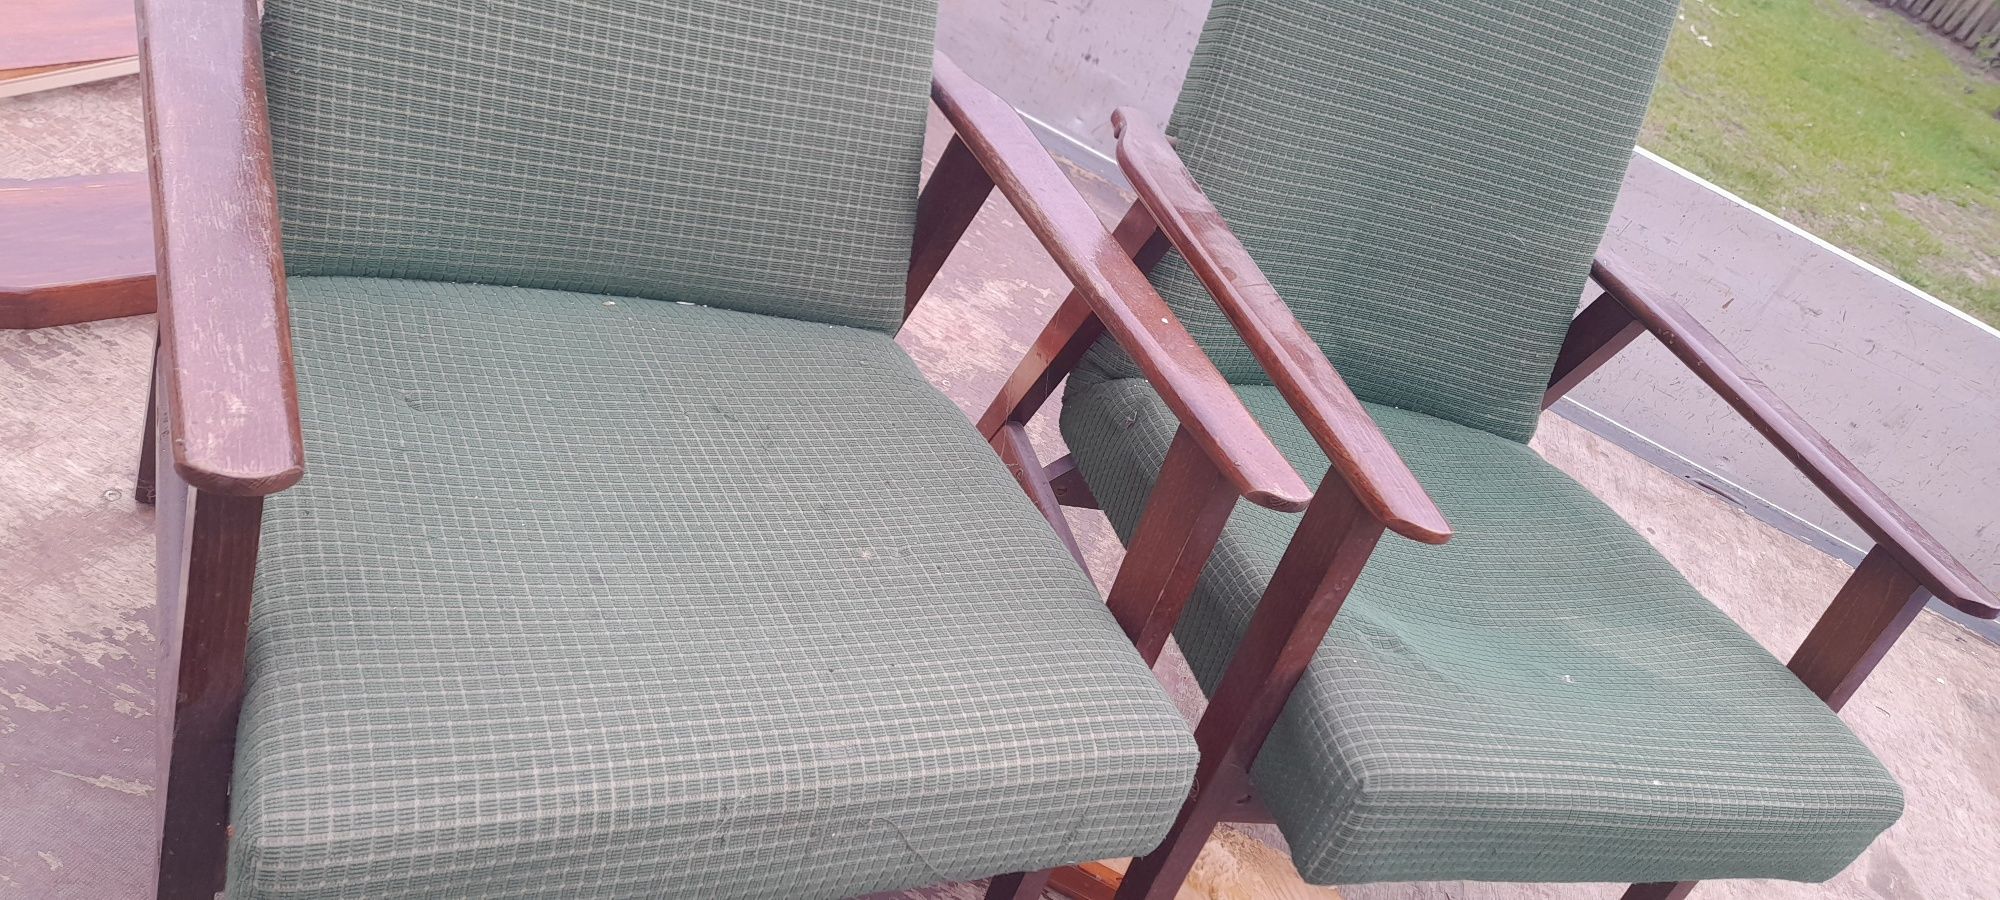 Fotele lisek prl krzesła